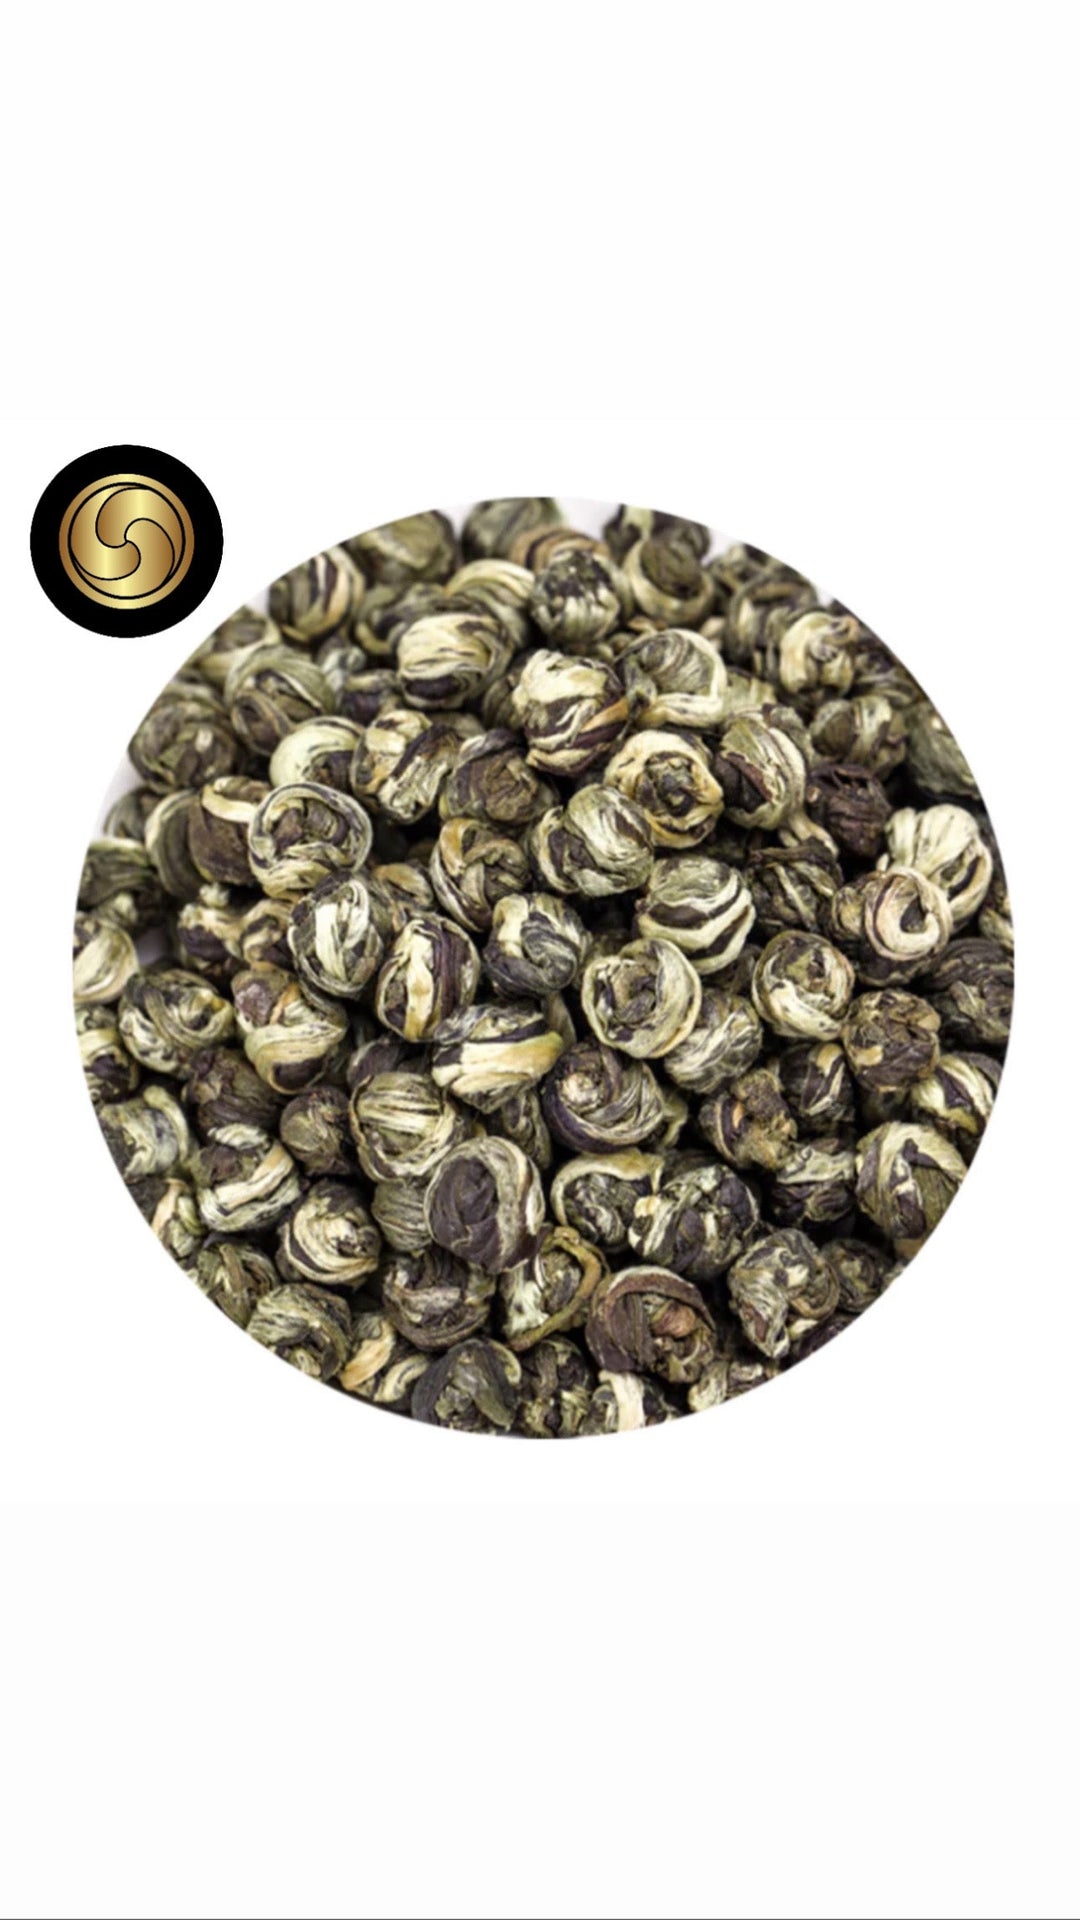 Jade Liquid Gold Tea Album • 8 Bagua Teas • EU Organic Teas • 360° Tea Ceremony Gift Box ☰☱☲☳☴☵☶☷